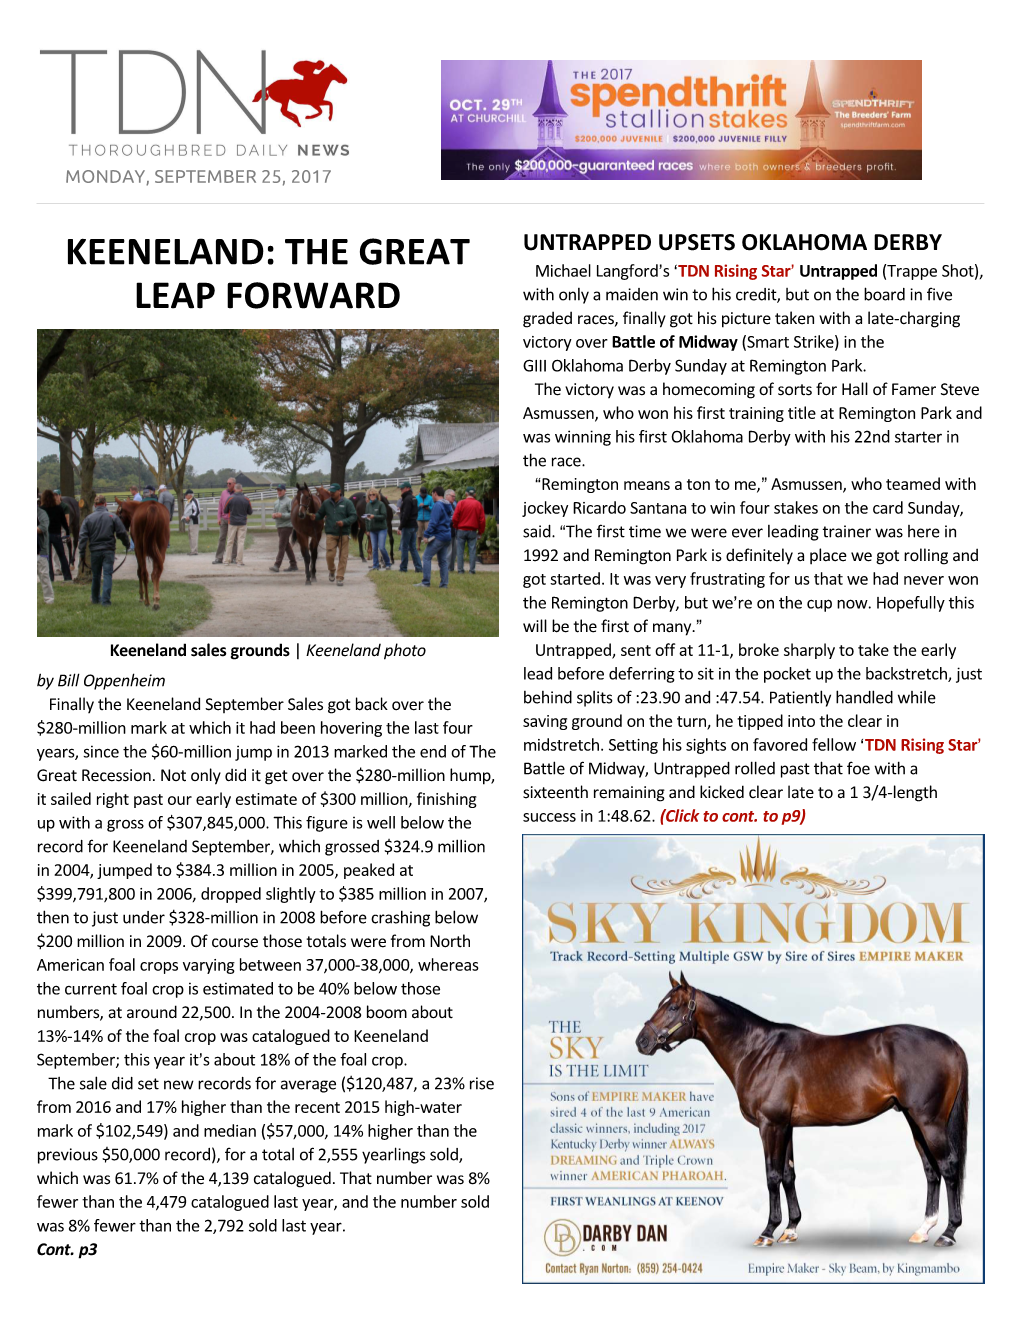 Keeneland: the Great Leap Forward